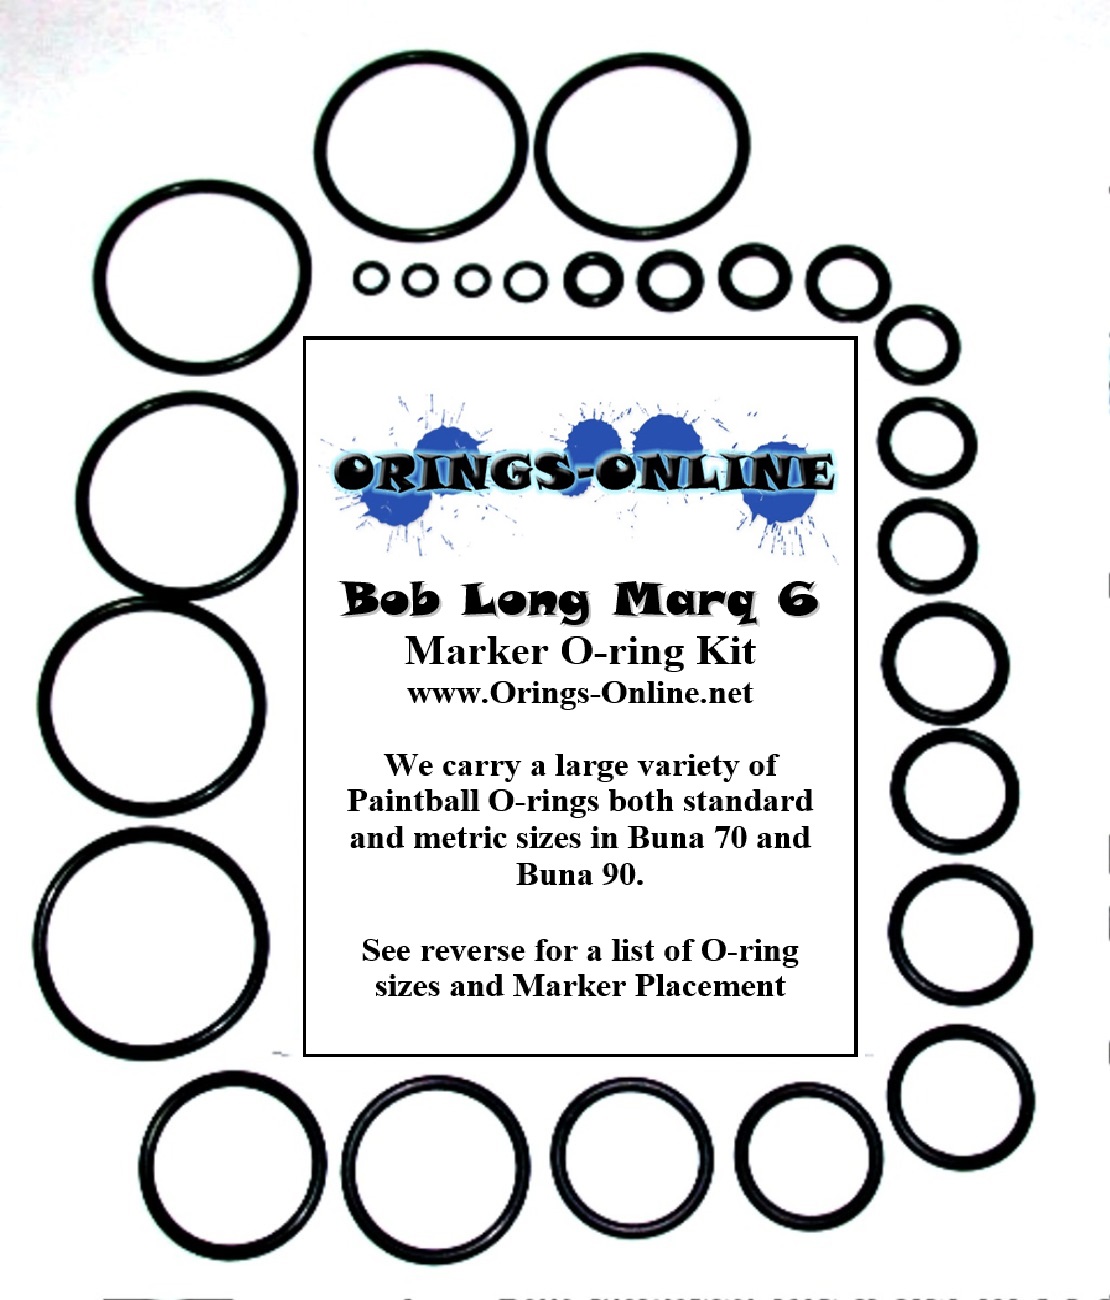 Bob Long Marq 6 Marker O-ring Kit